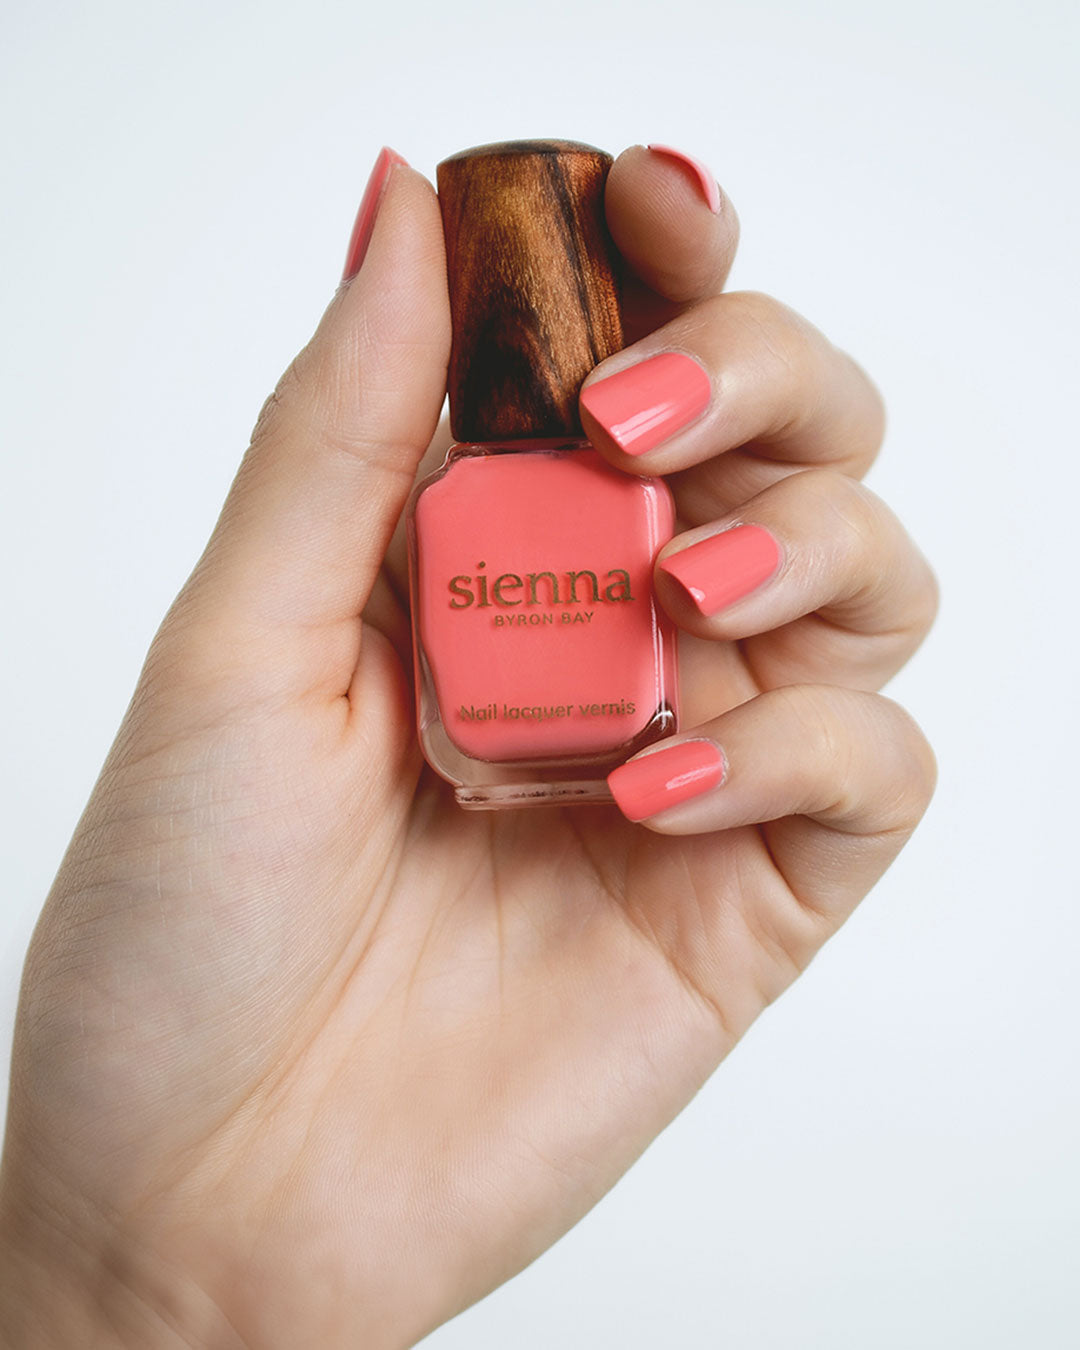 Grapefruit Pink nail polish swatch on fair skin tone by Sienna Byron Bay